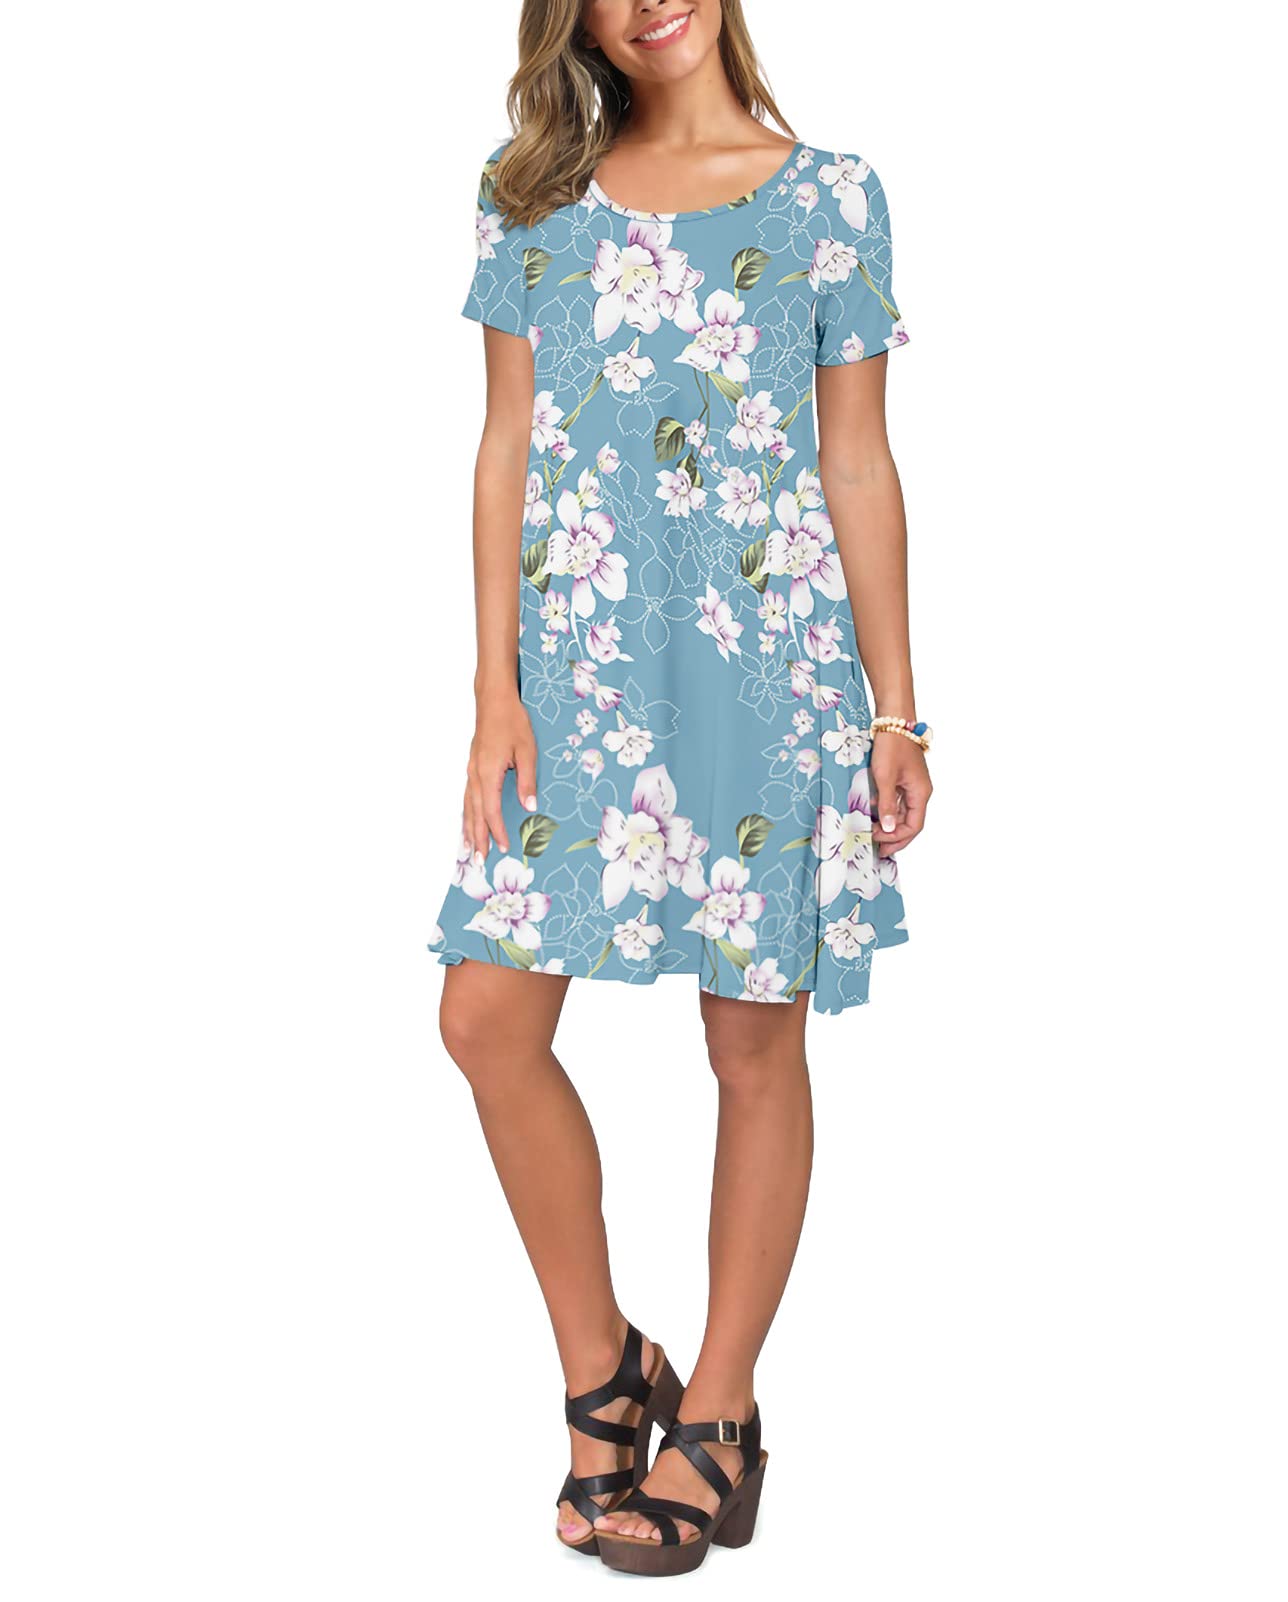 KORSIS Summer Dresses For Women Casual T Shirt Dresses Swing Flowy Beach Vacation Sundress with Pockets